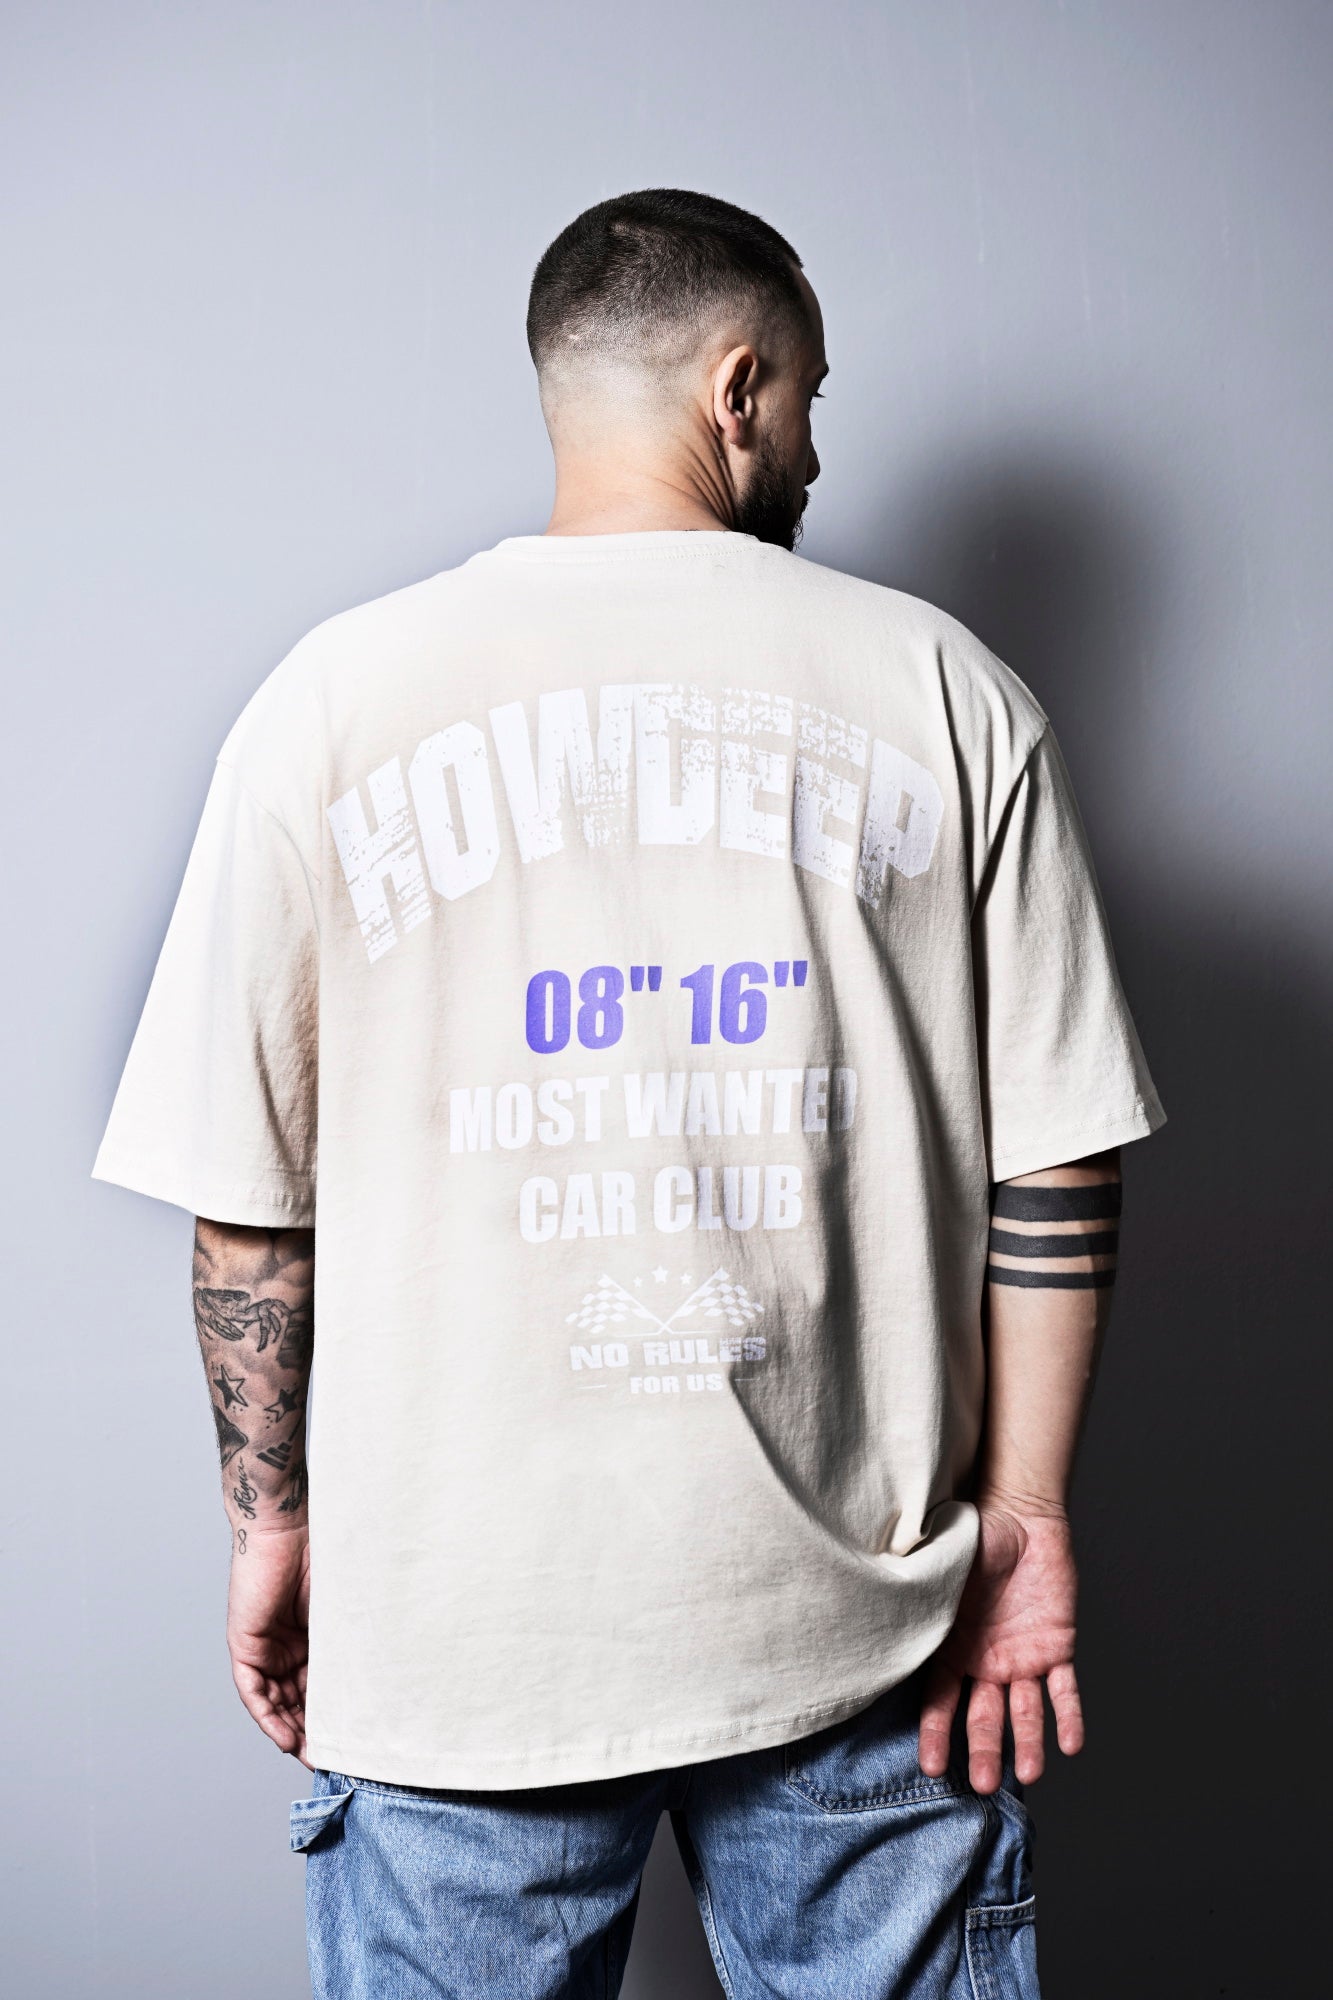 MW CARCLUB- Premium Big Oversized Shirt